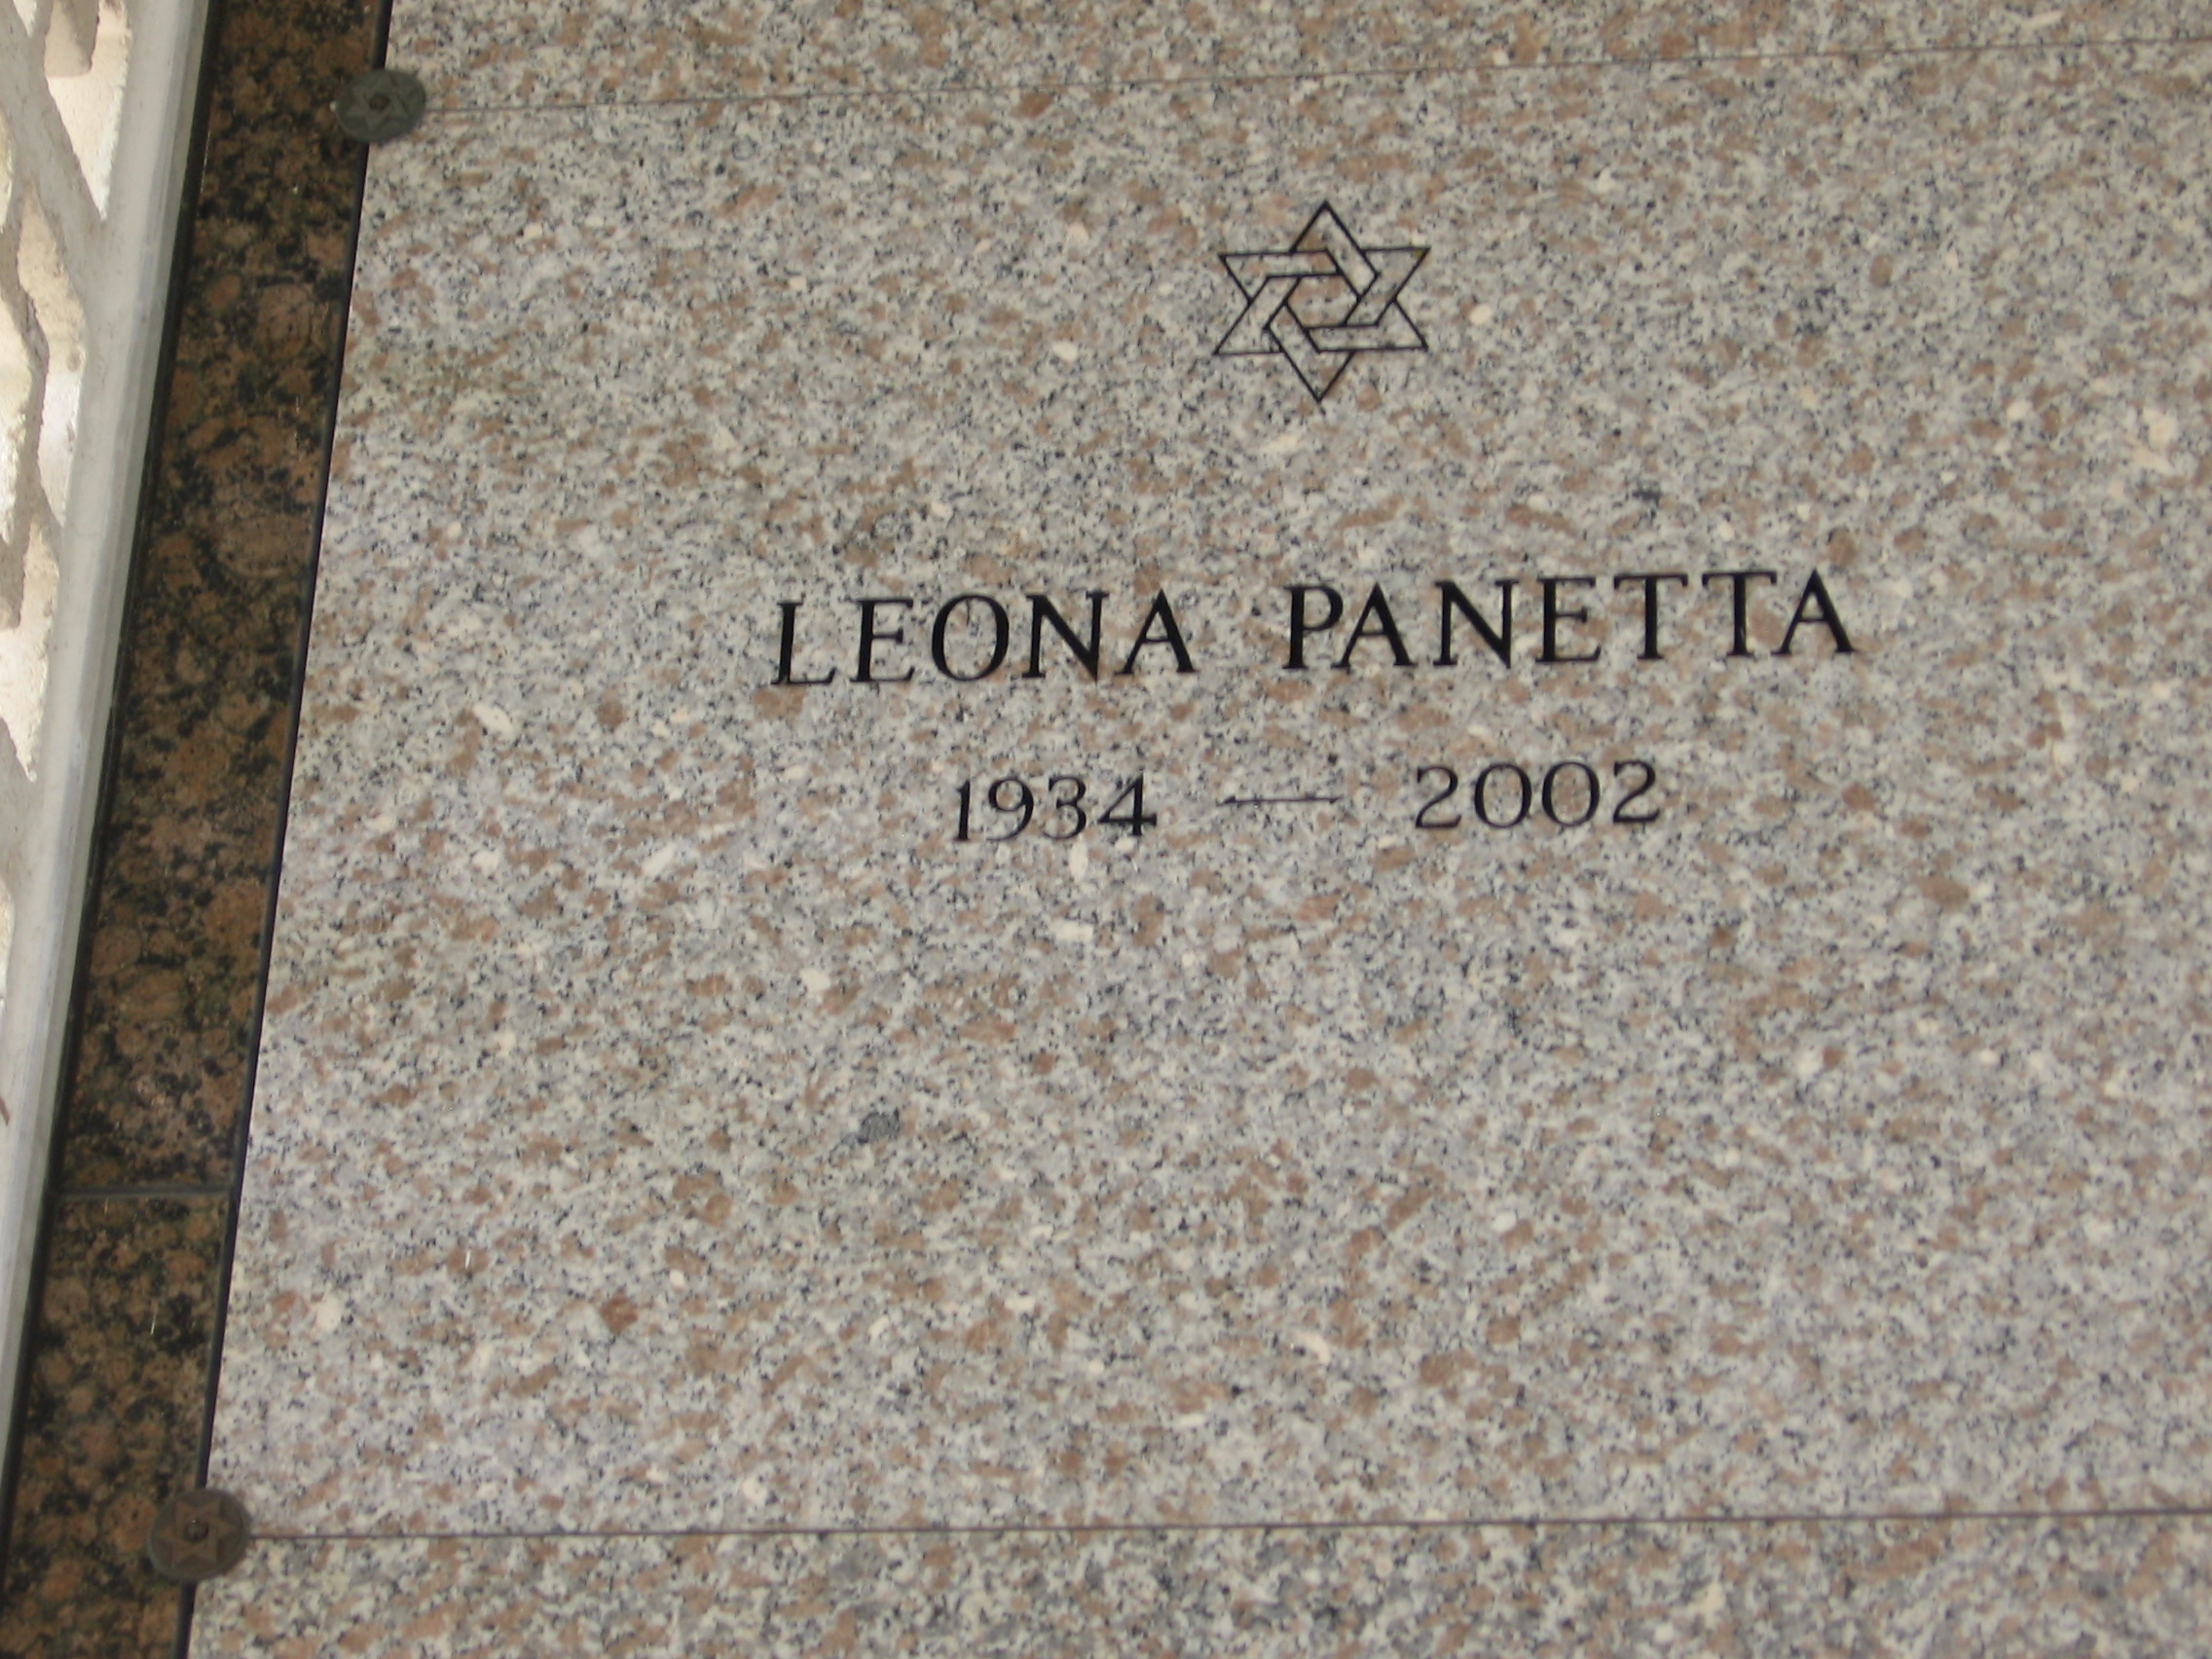 Leona Panetta